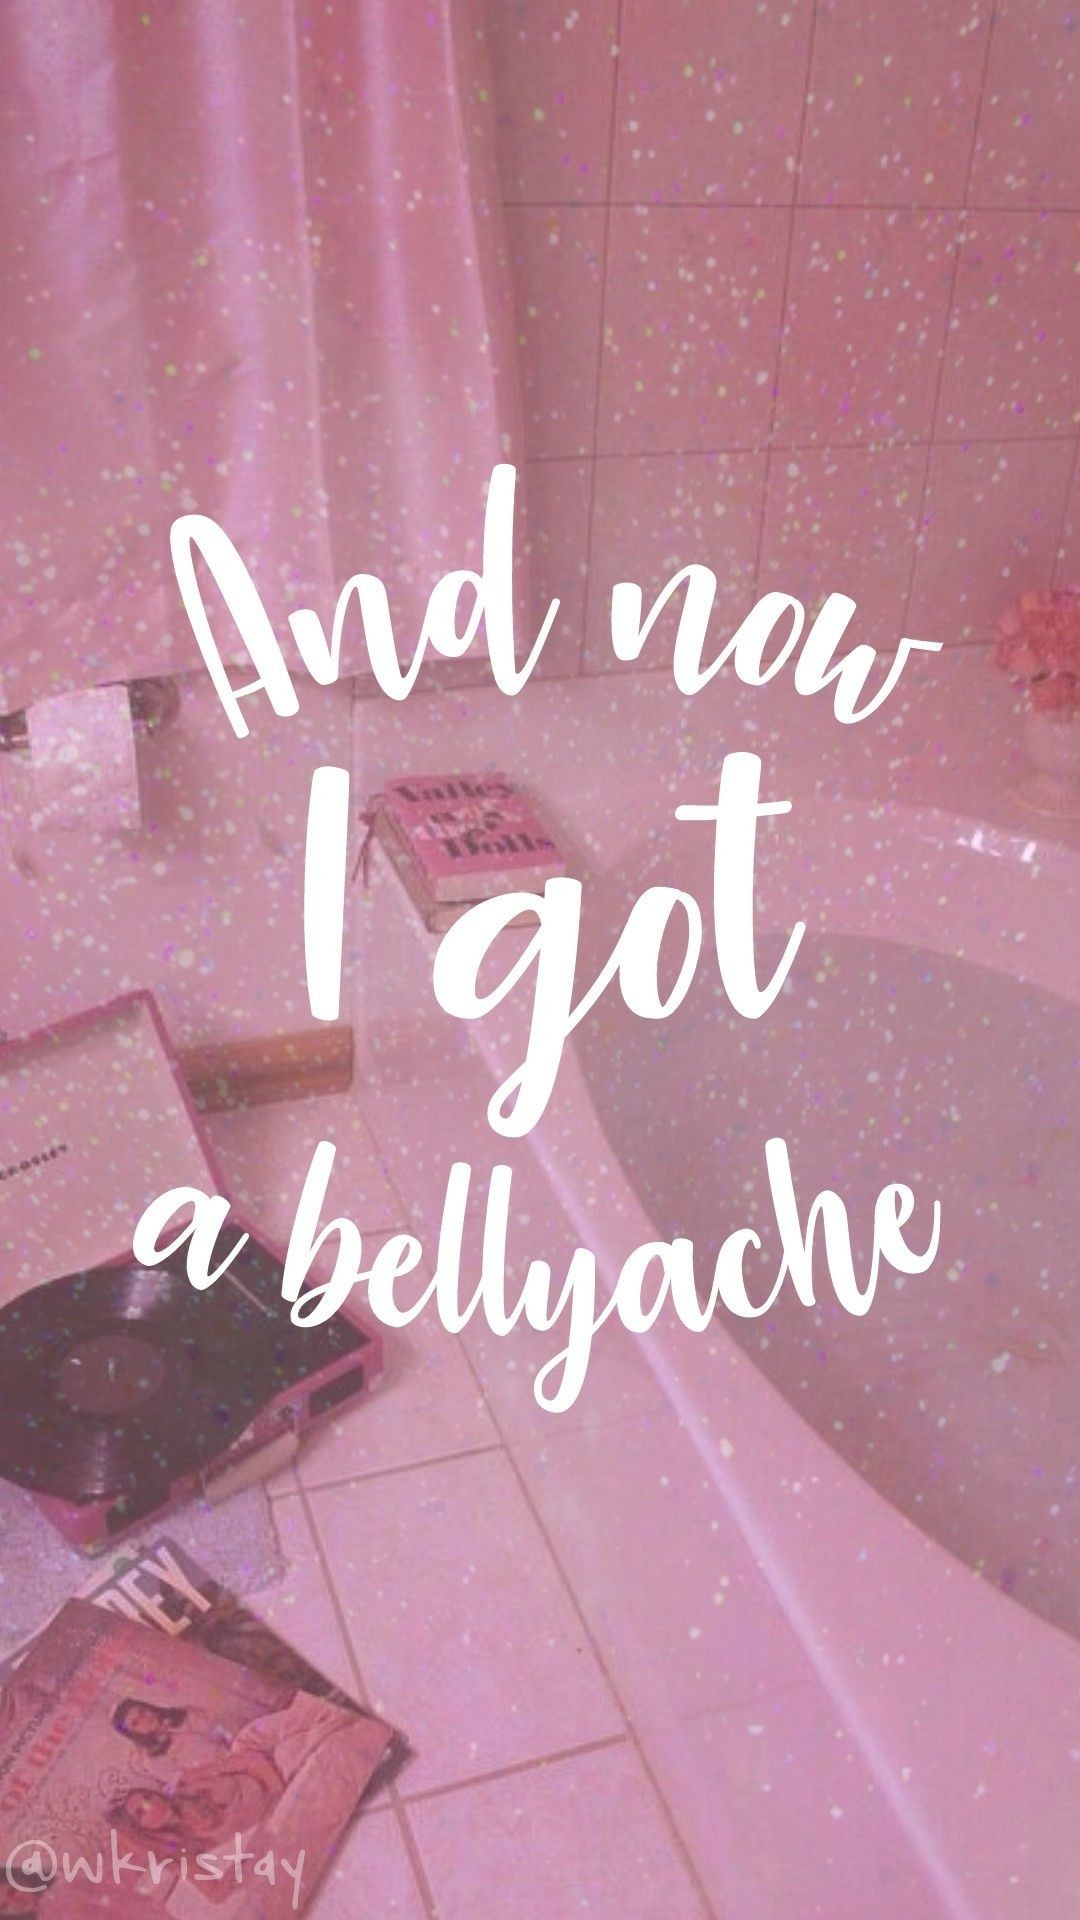 1080x1920 bellyache - Billie Eilish Song Lyrics Wallpaper, Hd Wallpaper, Billie  Eilish, Shawn Mendes